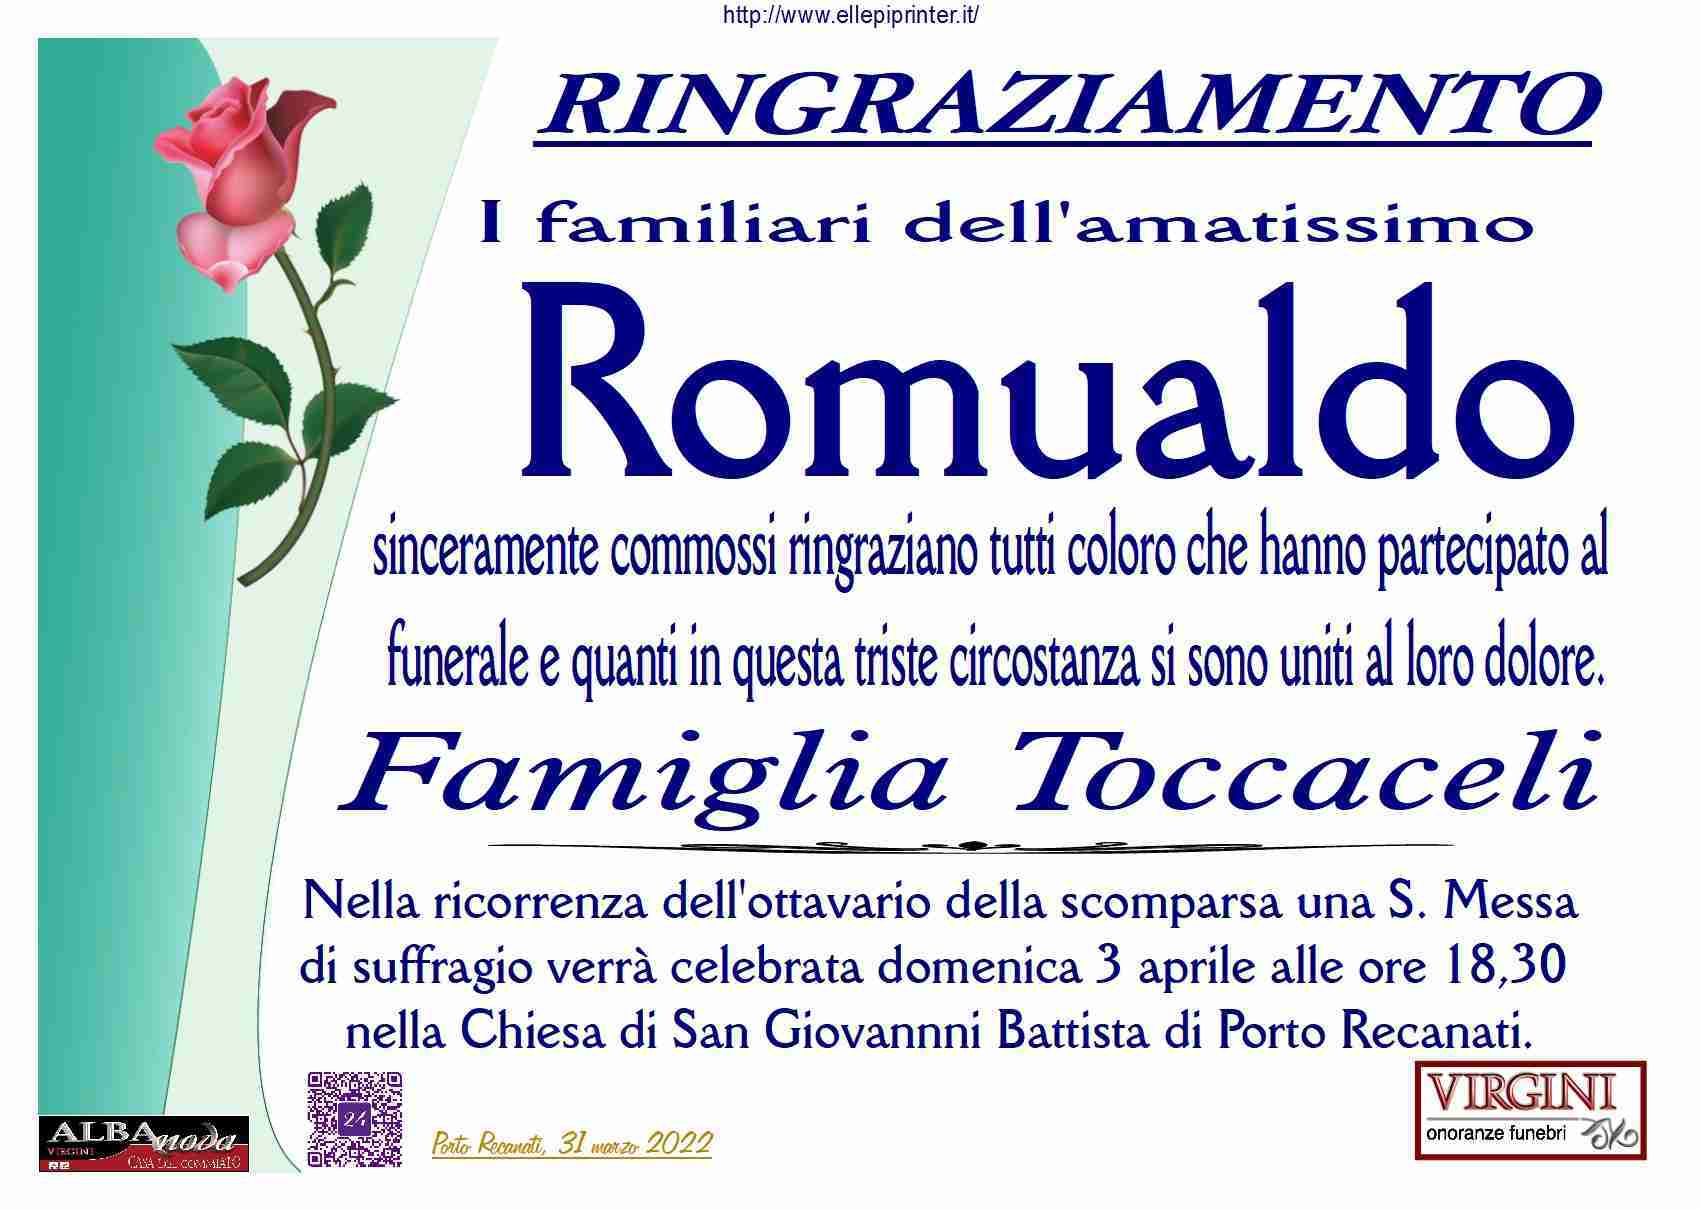 Romualdo Toccaceli